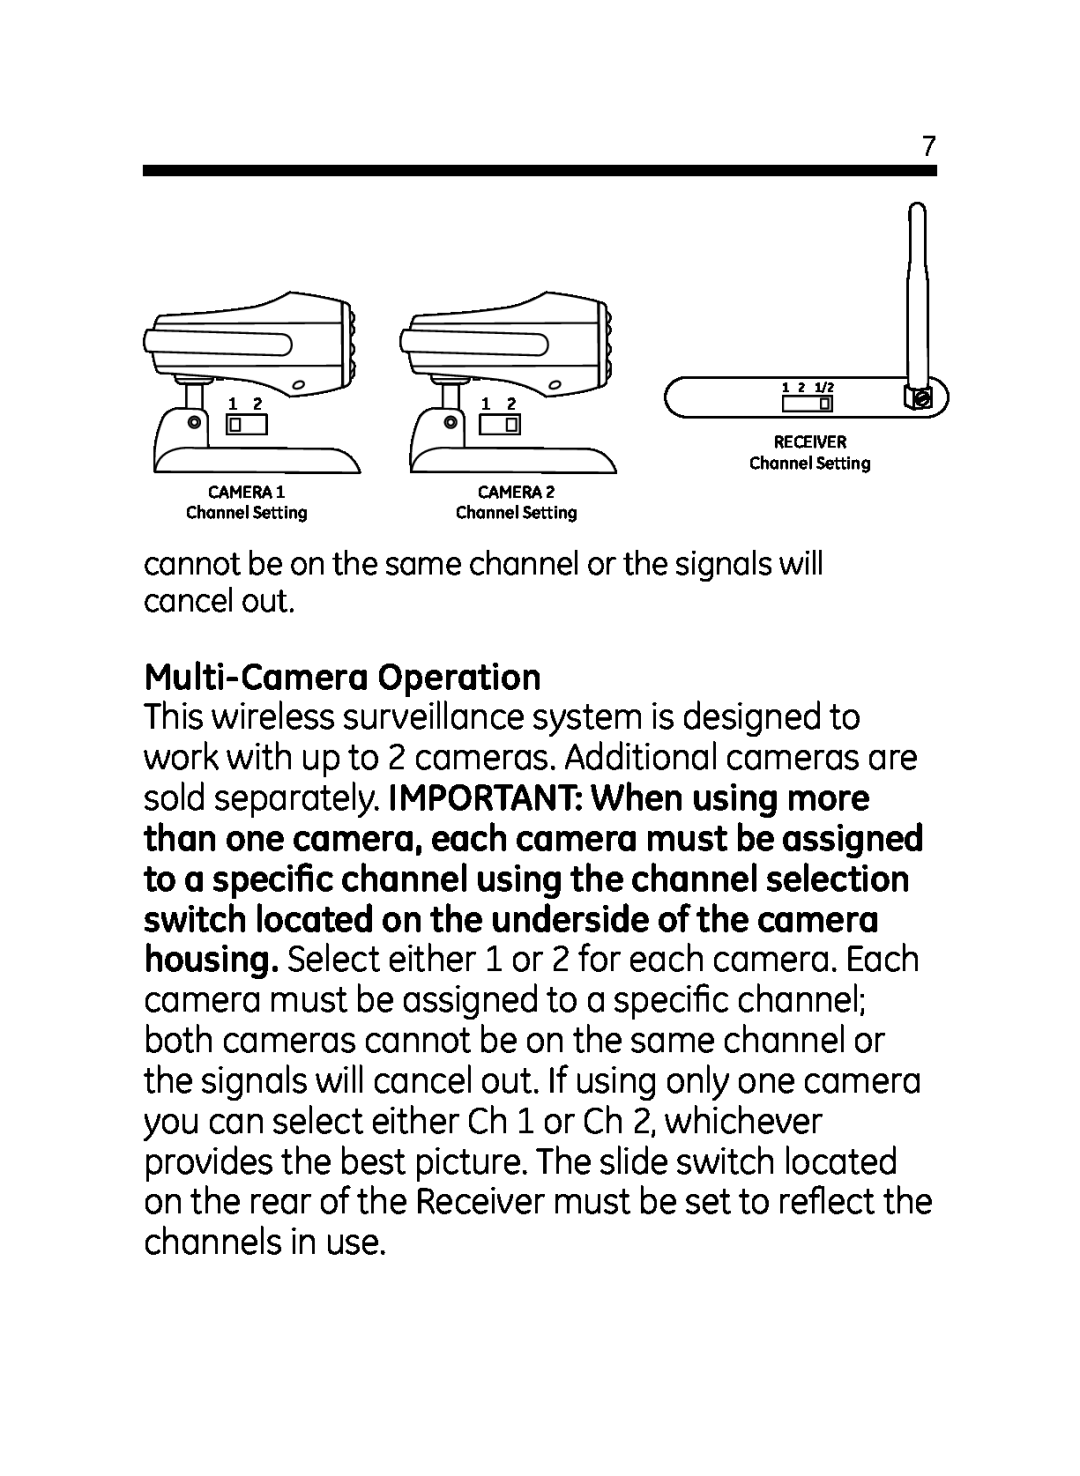 Jasco 45234 user manual Multi-CameraOperation, RECEIVER Channel Setting CAMERA Channel Setting 